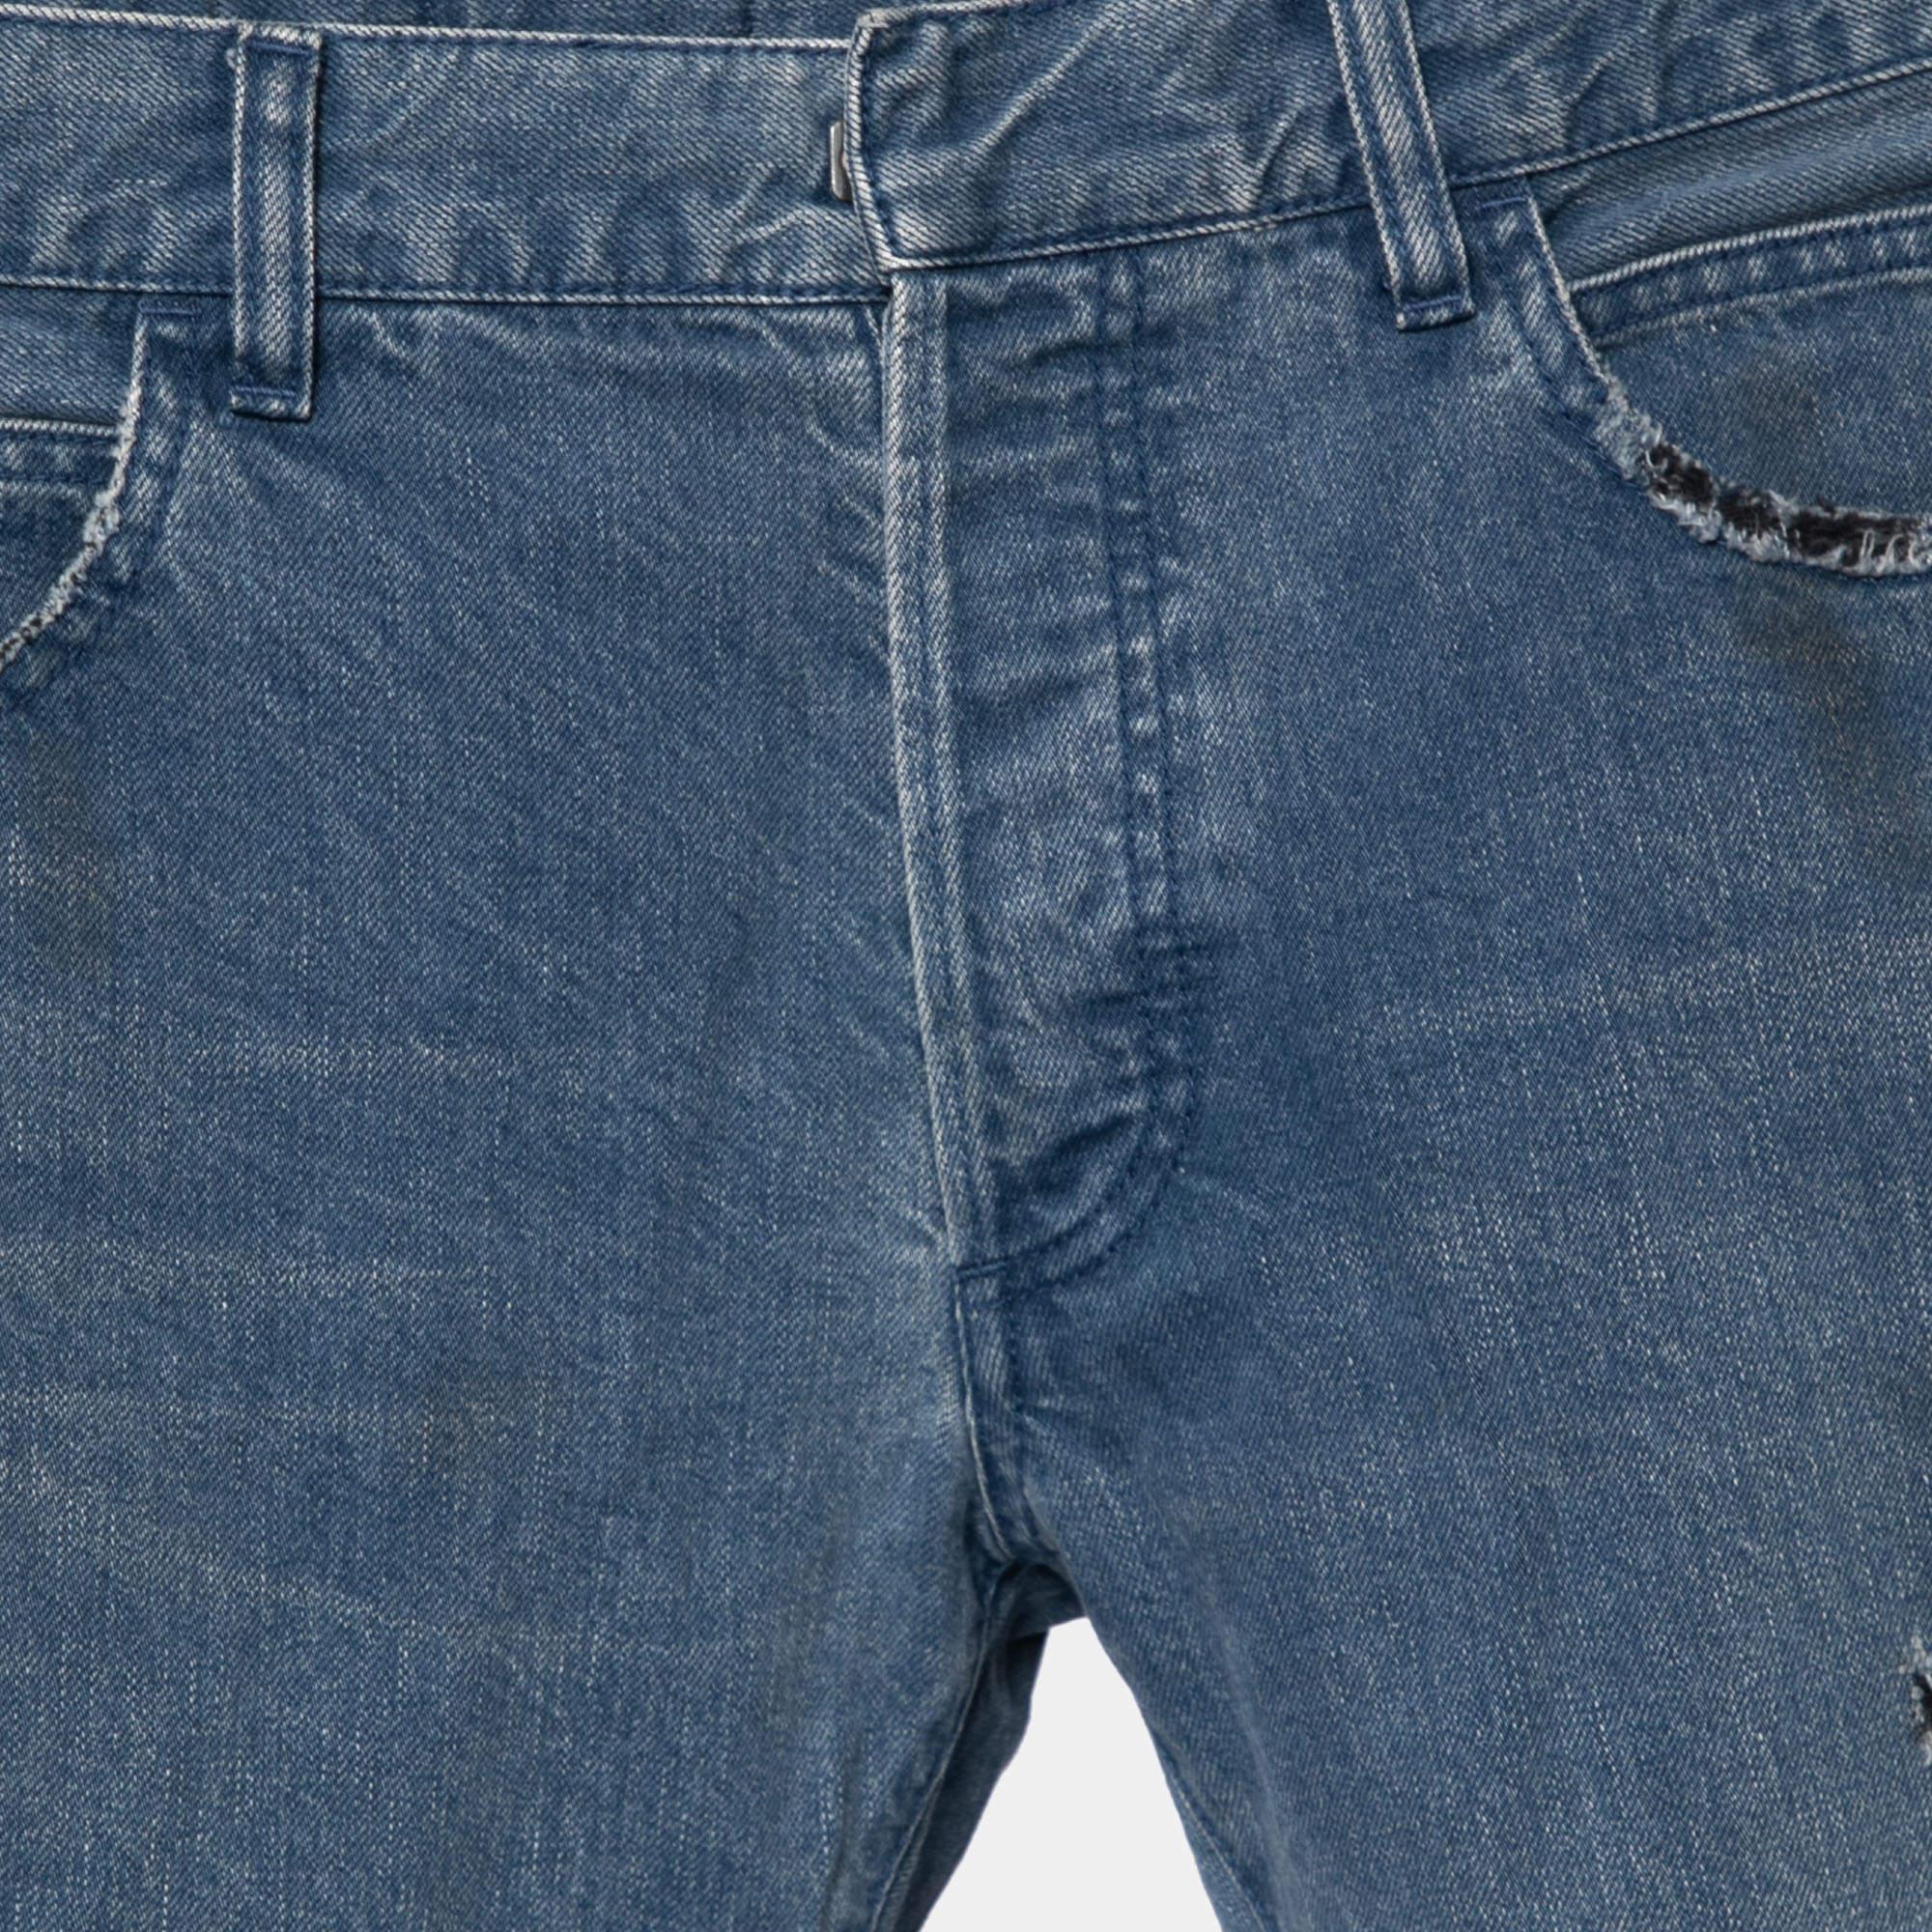 Balmain Blue Distressed Denim Frayed Edged Shorts M In Good Condition For Sale In Dubai, Al Qouz 2